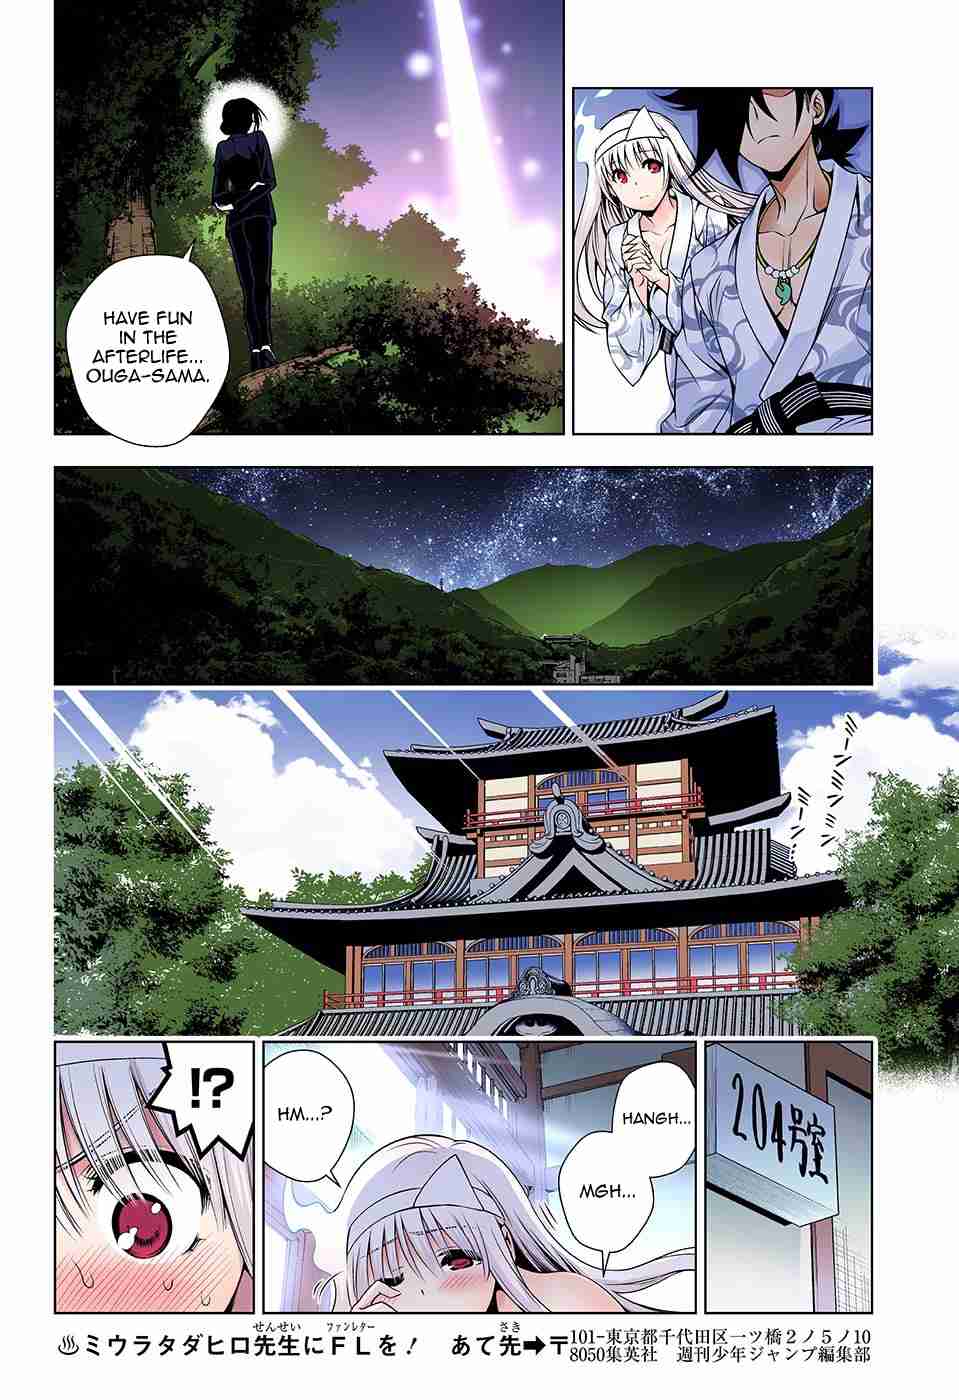 Yuragi sou no Yuuna san Digital Colored Comics Vol. 15 Ch. 129 Ouga san's Wish